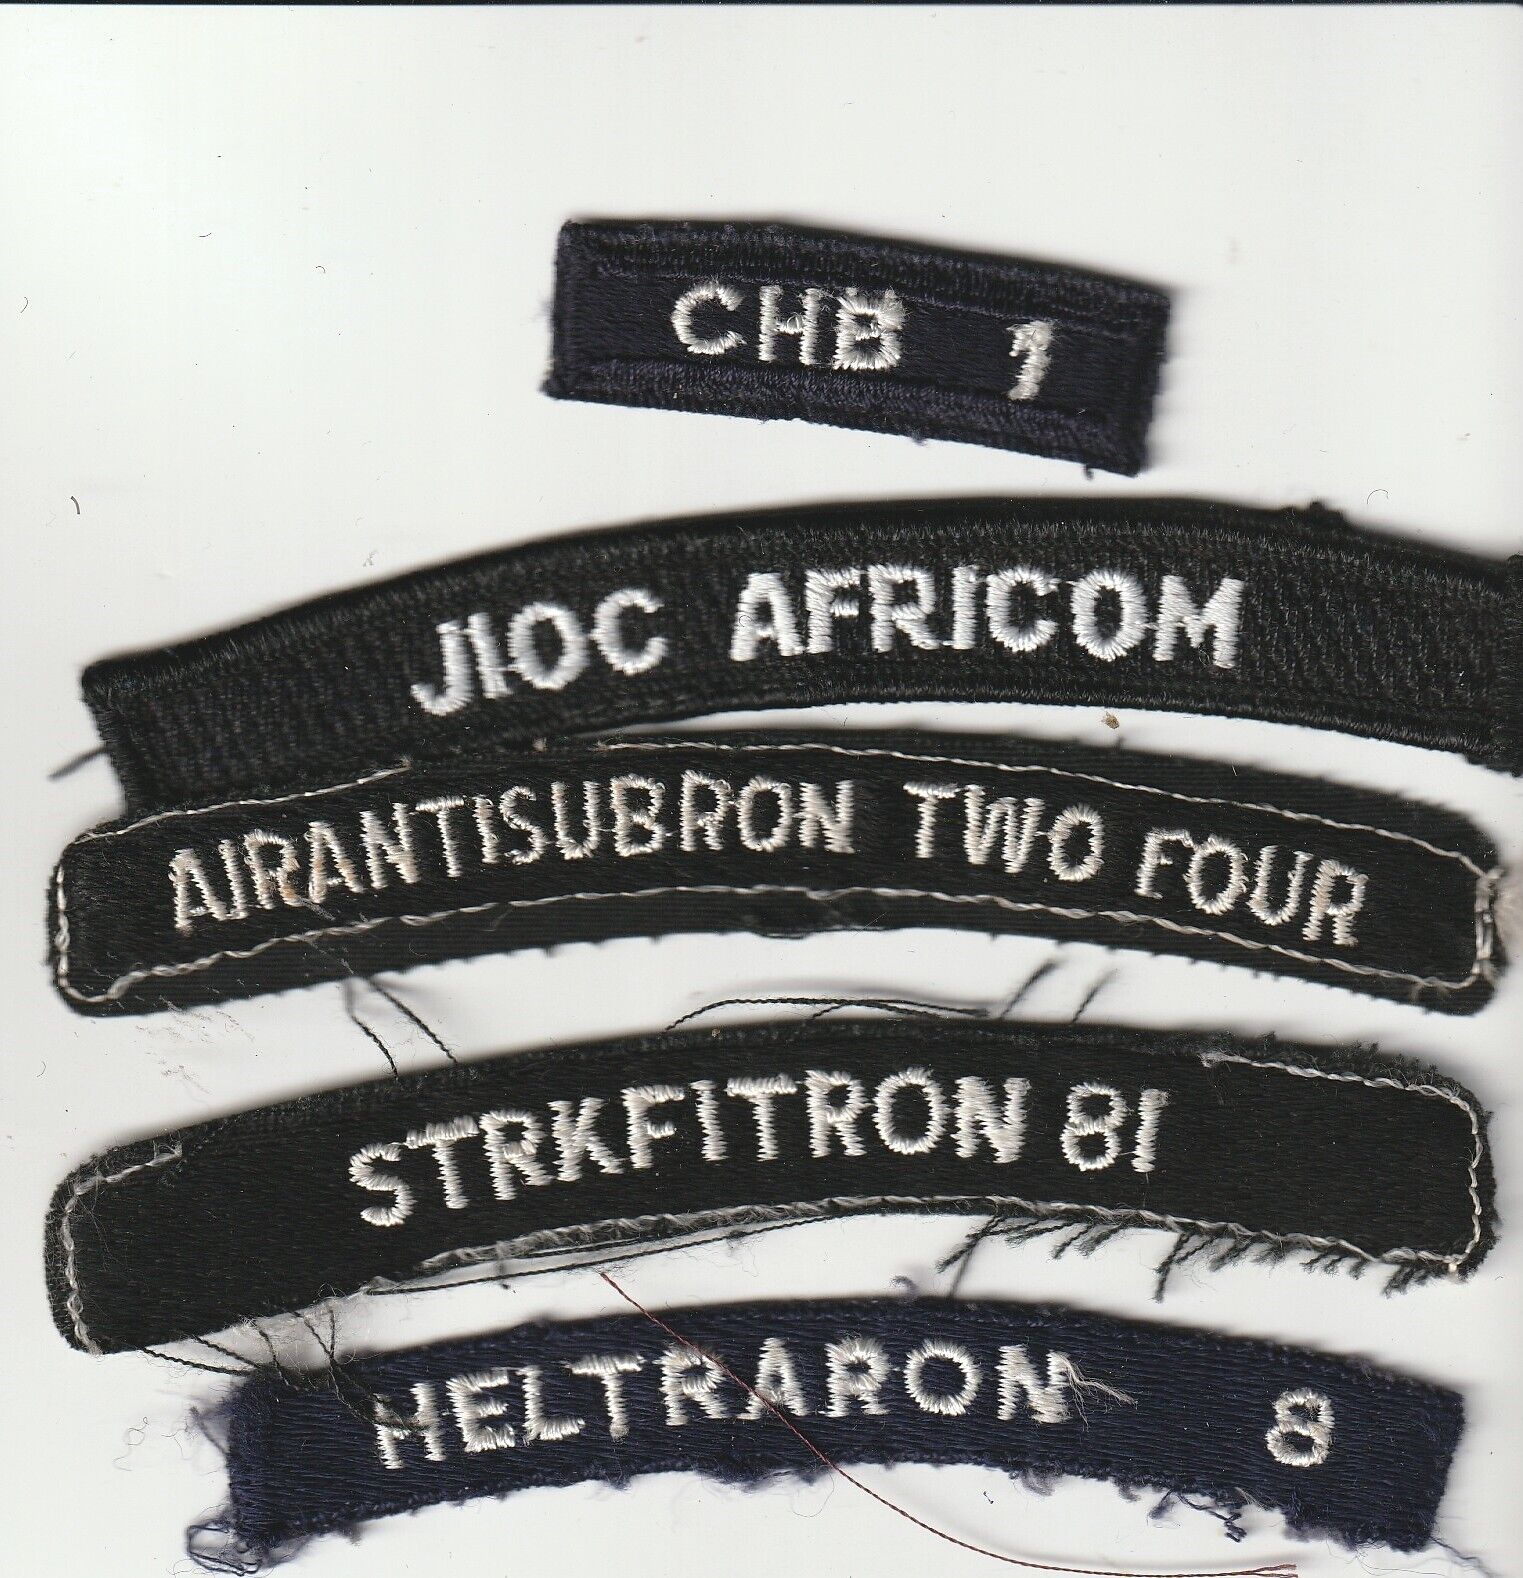 USN US NAVY CHB 1, JIOC AFRICOM,AIRANTISUBRON 24,STRFITRON 81,HELTRAON 8  PATCH